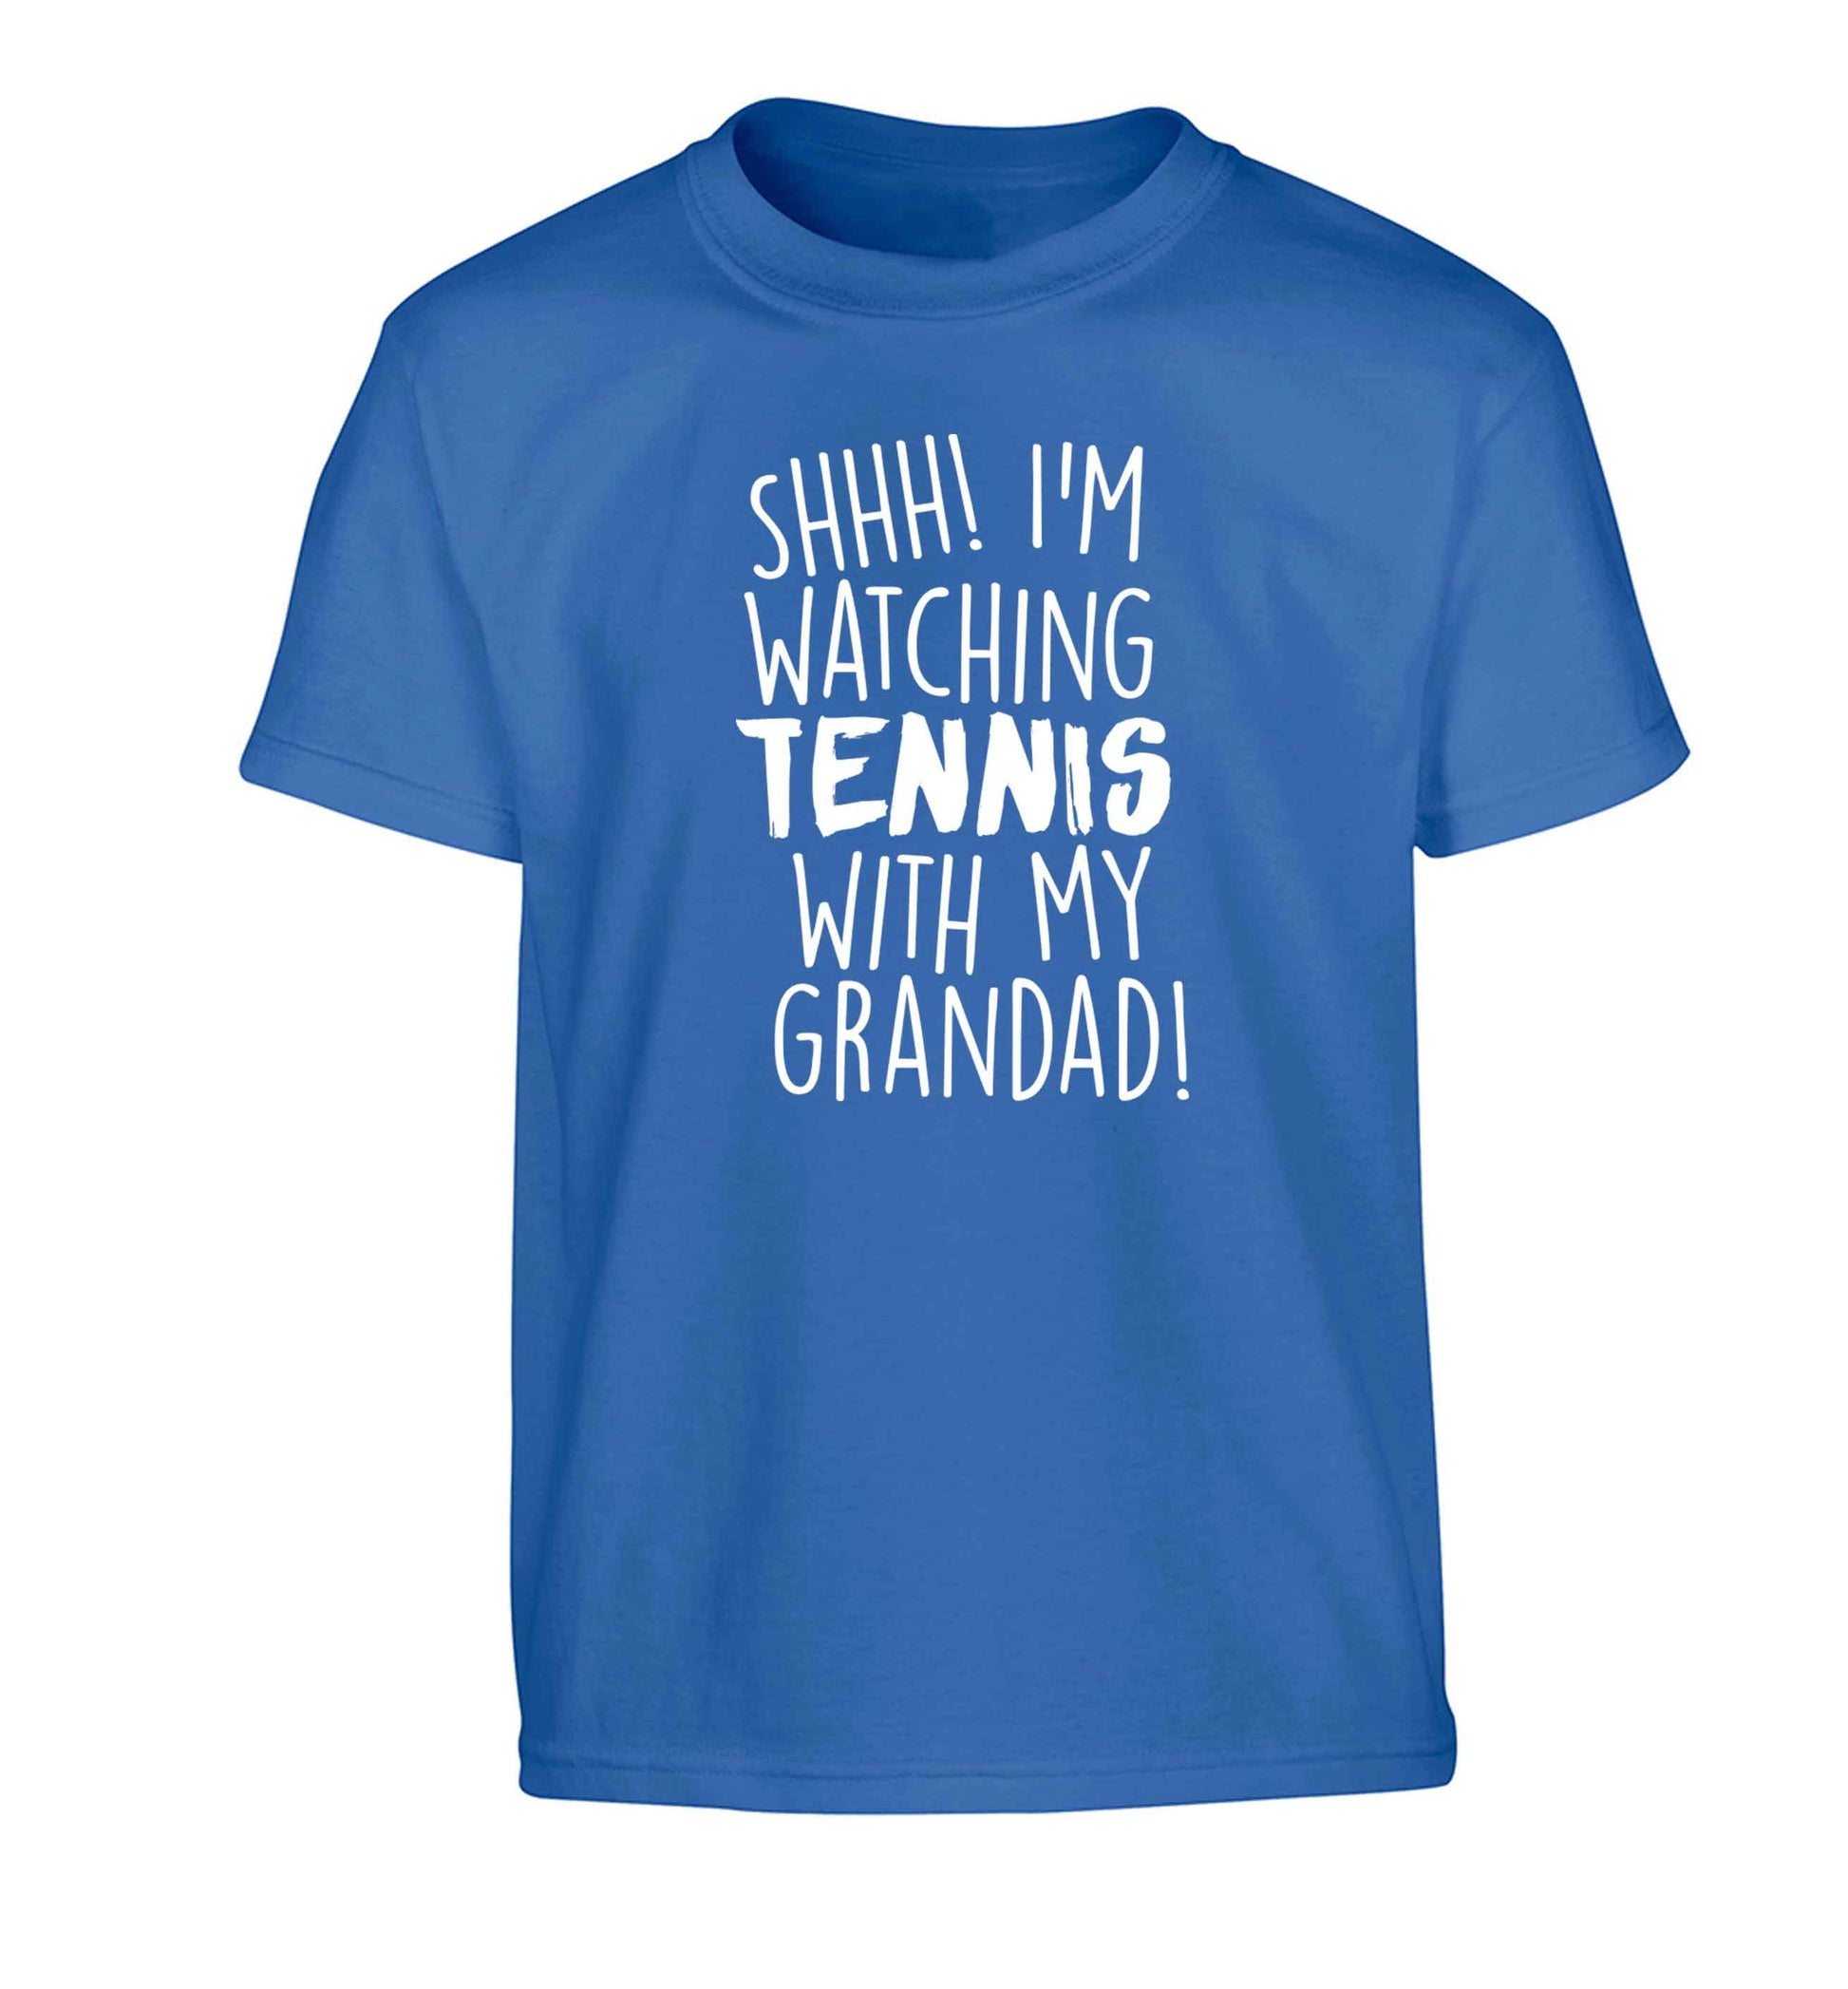 Shh! I'm watching tennis with my grandad! Children's blue Tshirt 12-13 Years